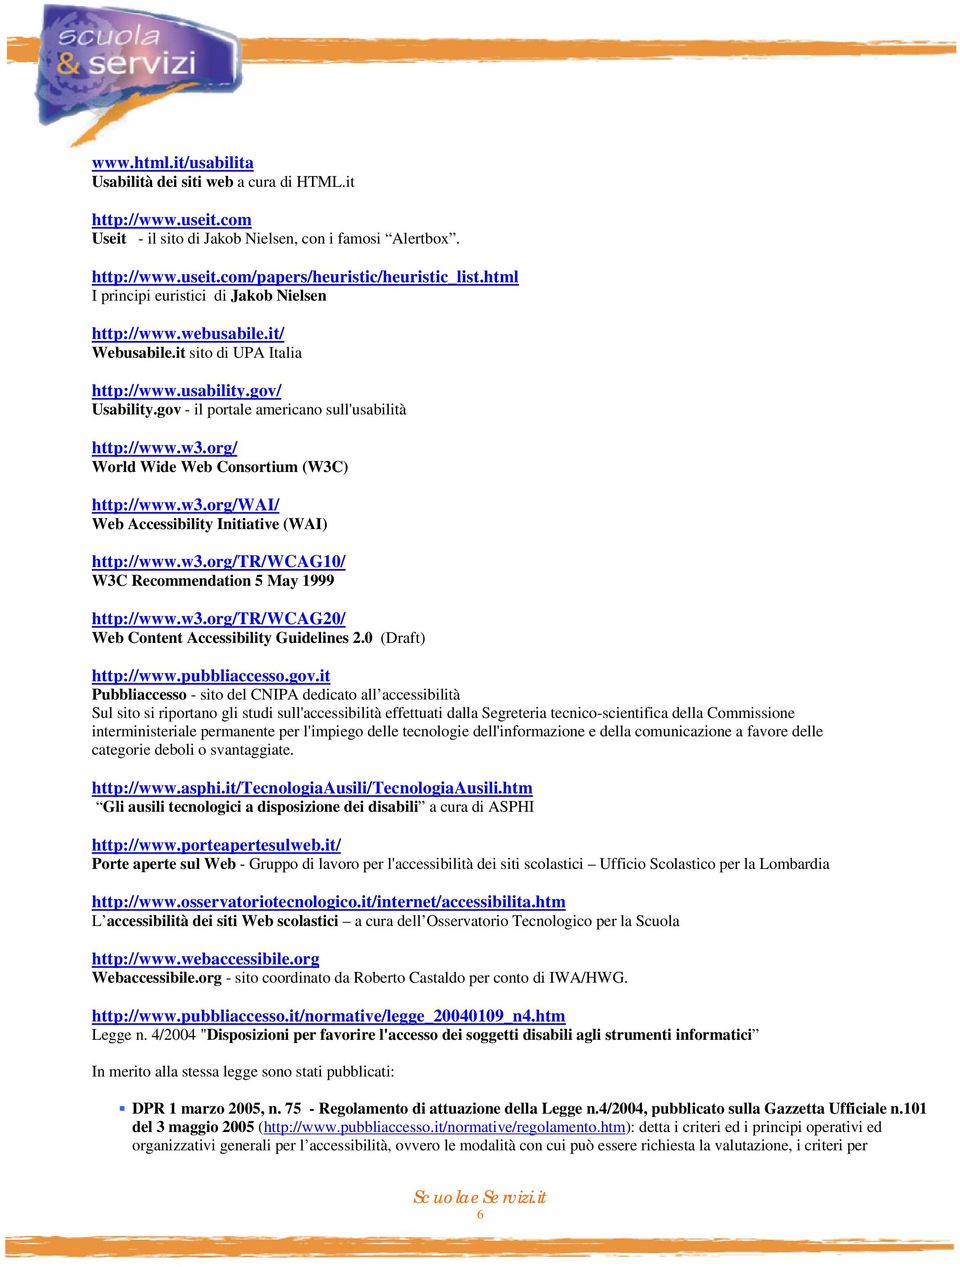 org/ World Wide Web Consortium (W3C) http://www.w3.org/wai/ Web Accessibility Initiative (WAI) http://www.w3.org/tr/wcag10/ W3C Recommendation 5 May 1999 http://www.w3.org/tr/wcag20/ Web Content Accessibility Guidelines 2.